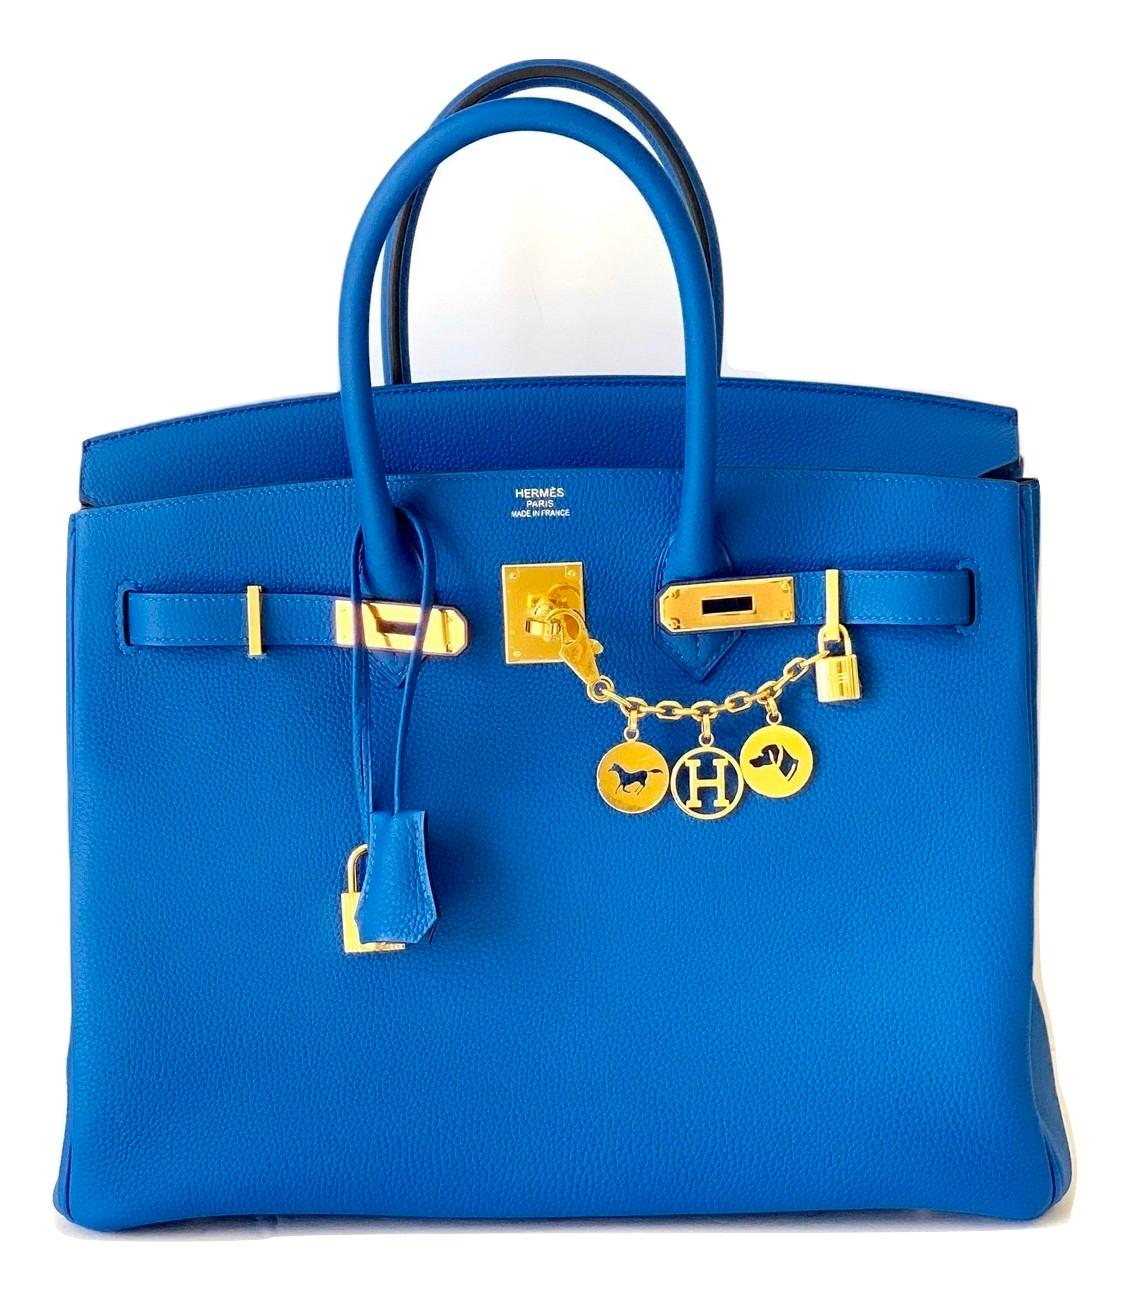 35cm Birkin
New Color: Blue Zellige
Togo Leather
Gold Hardware
Such a pretty blue!

Togo leather
Measurements: 13.75